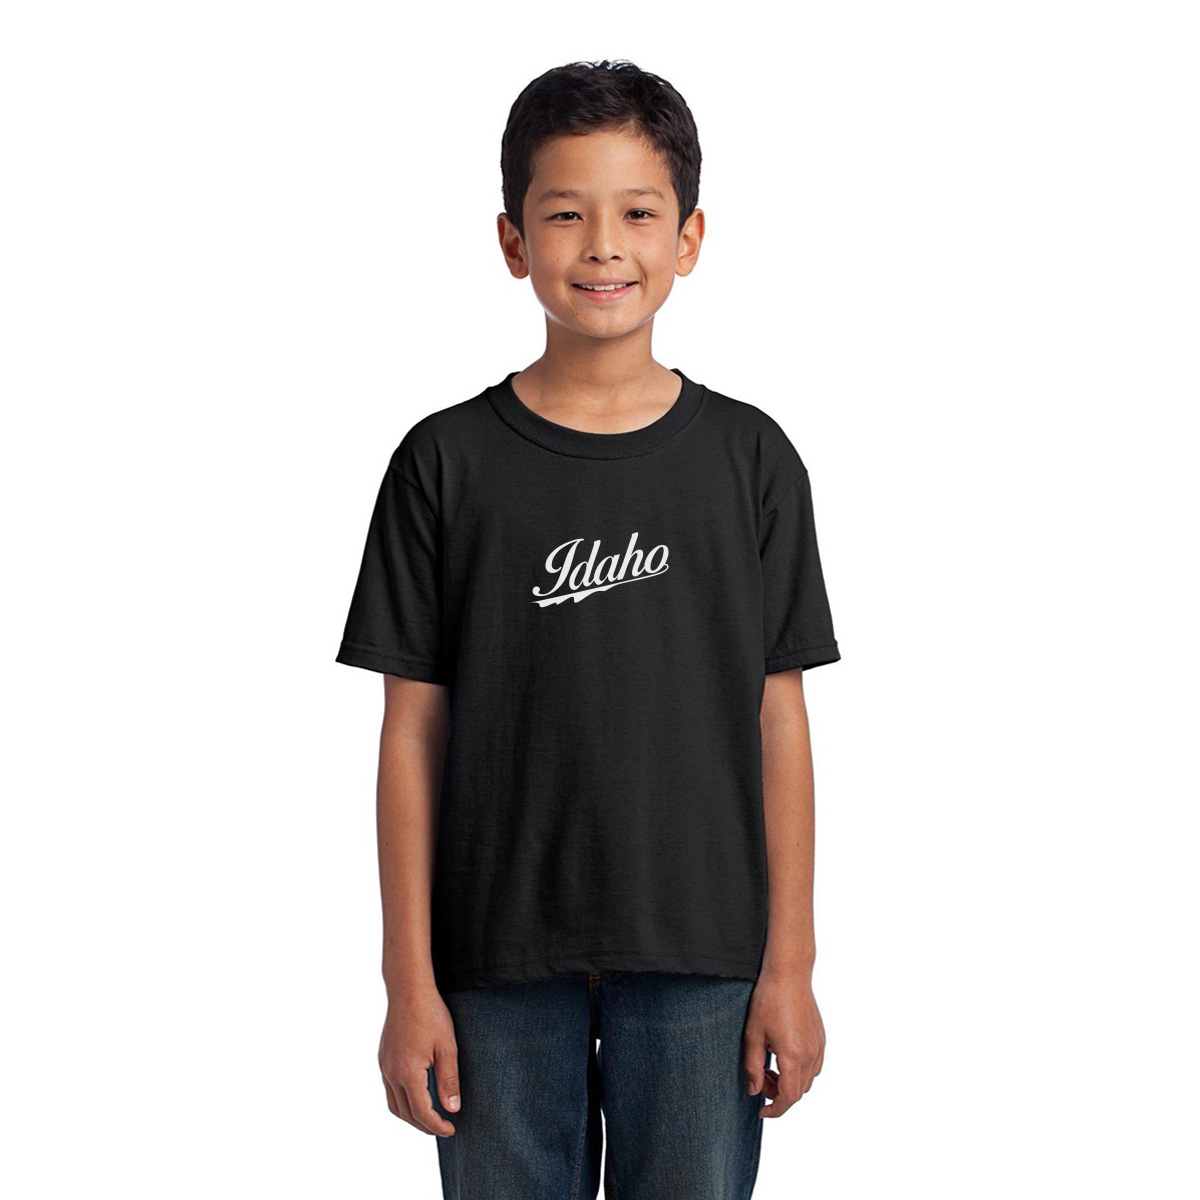 Idaho Kids T-shirt | Black